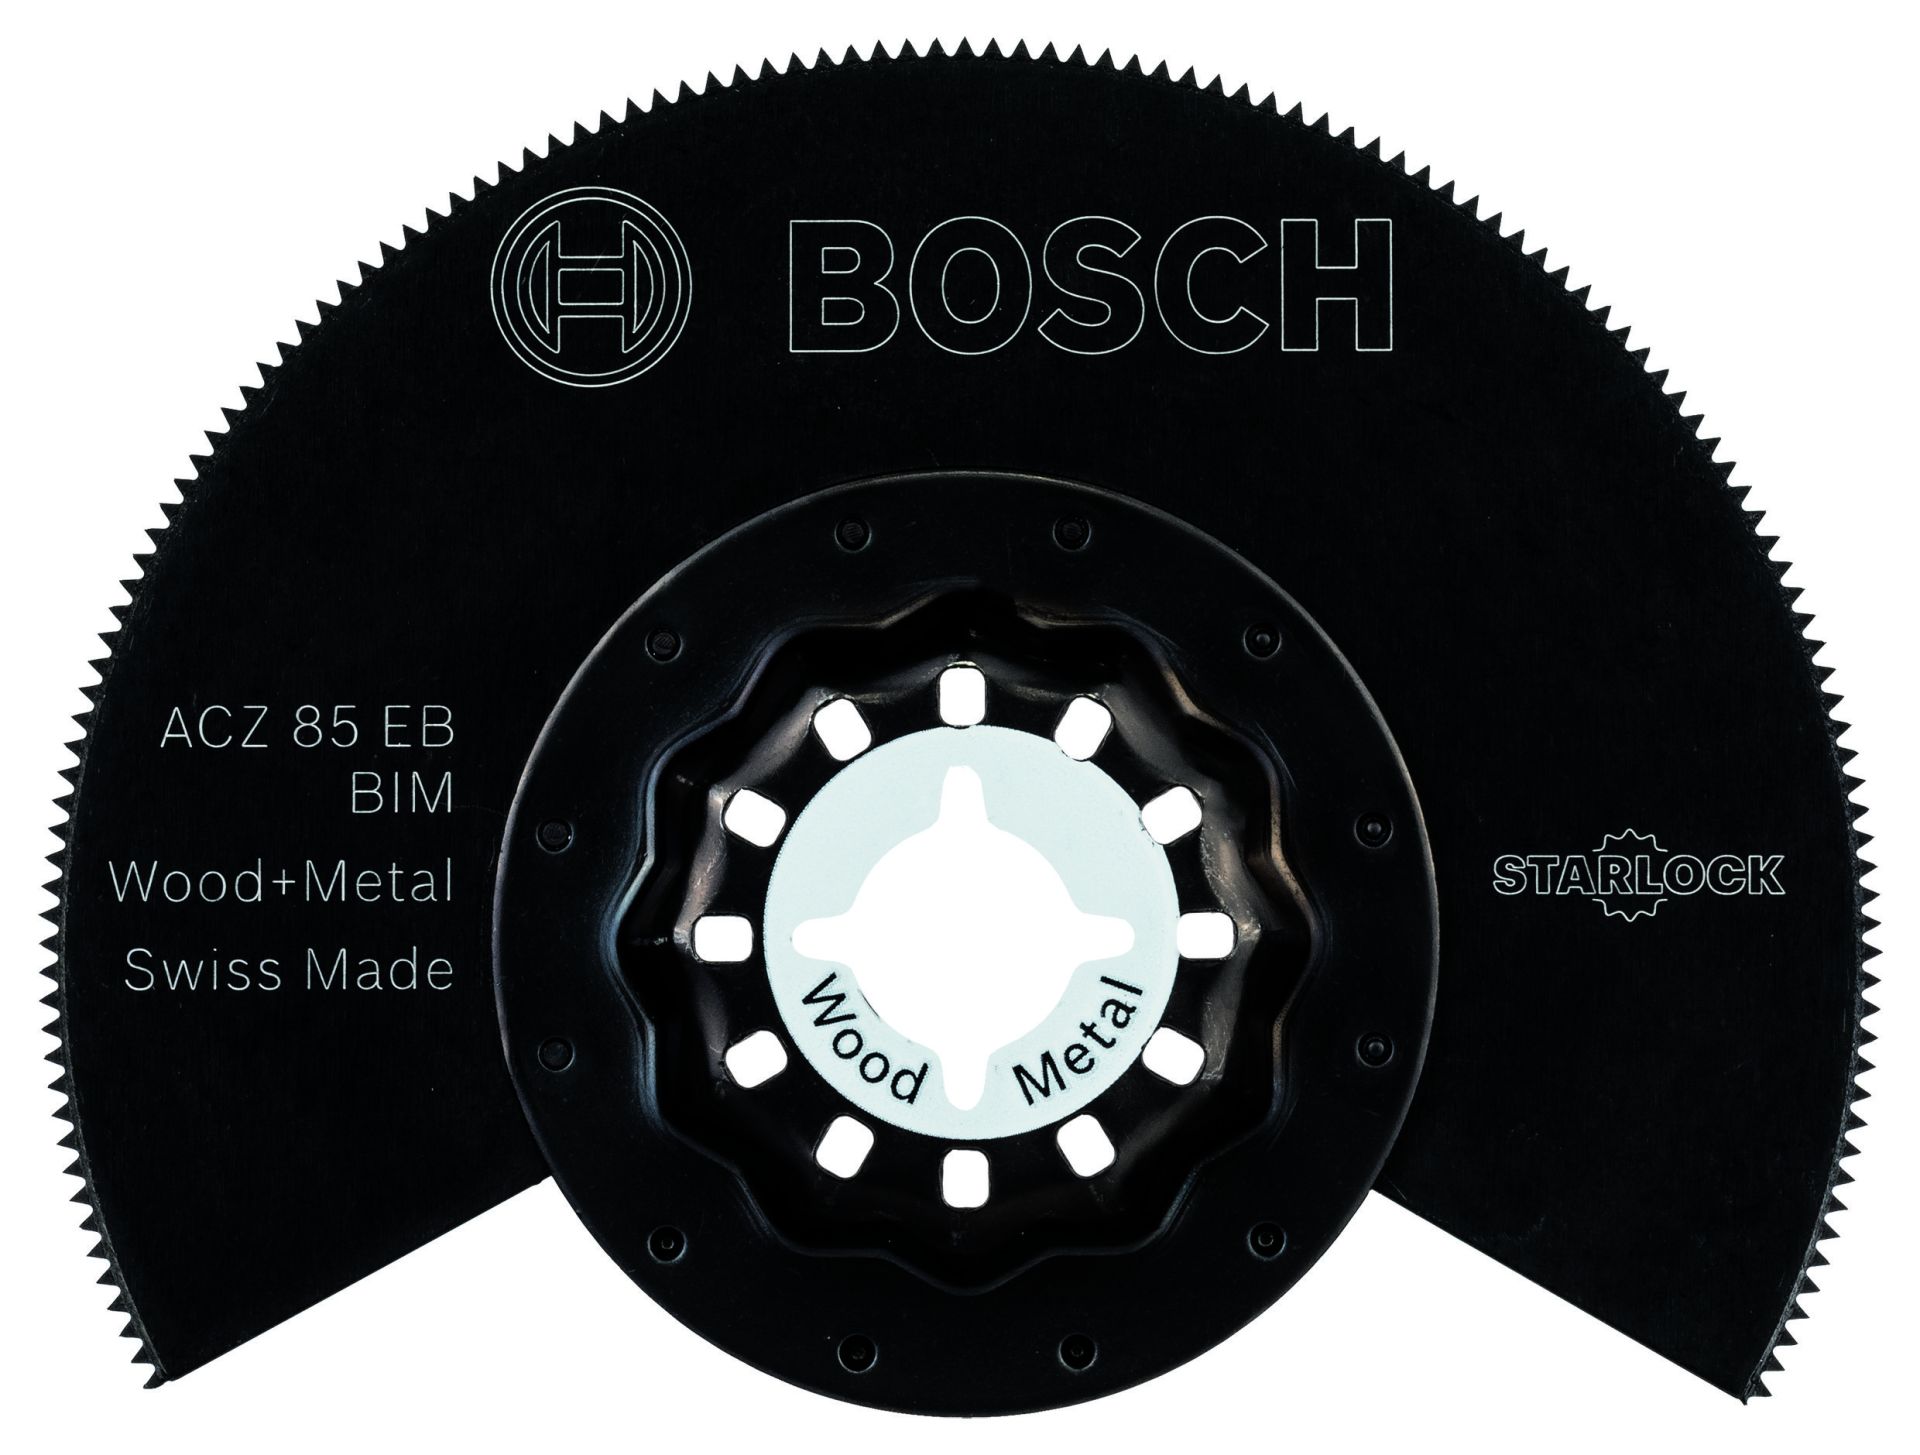 Bosch Starlock Testere Ucu Wm Acz 85 Eb 1 Lı 2608661636